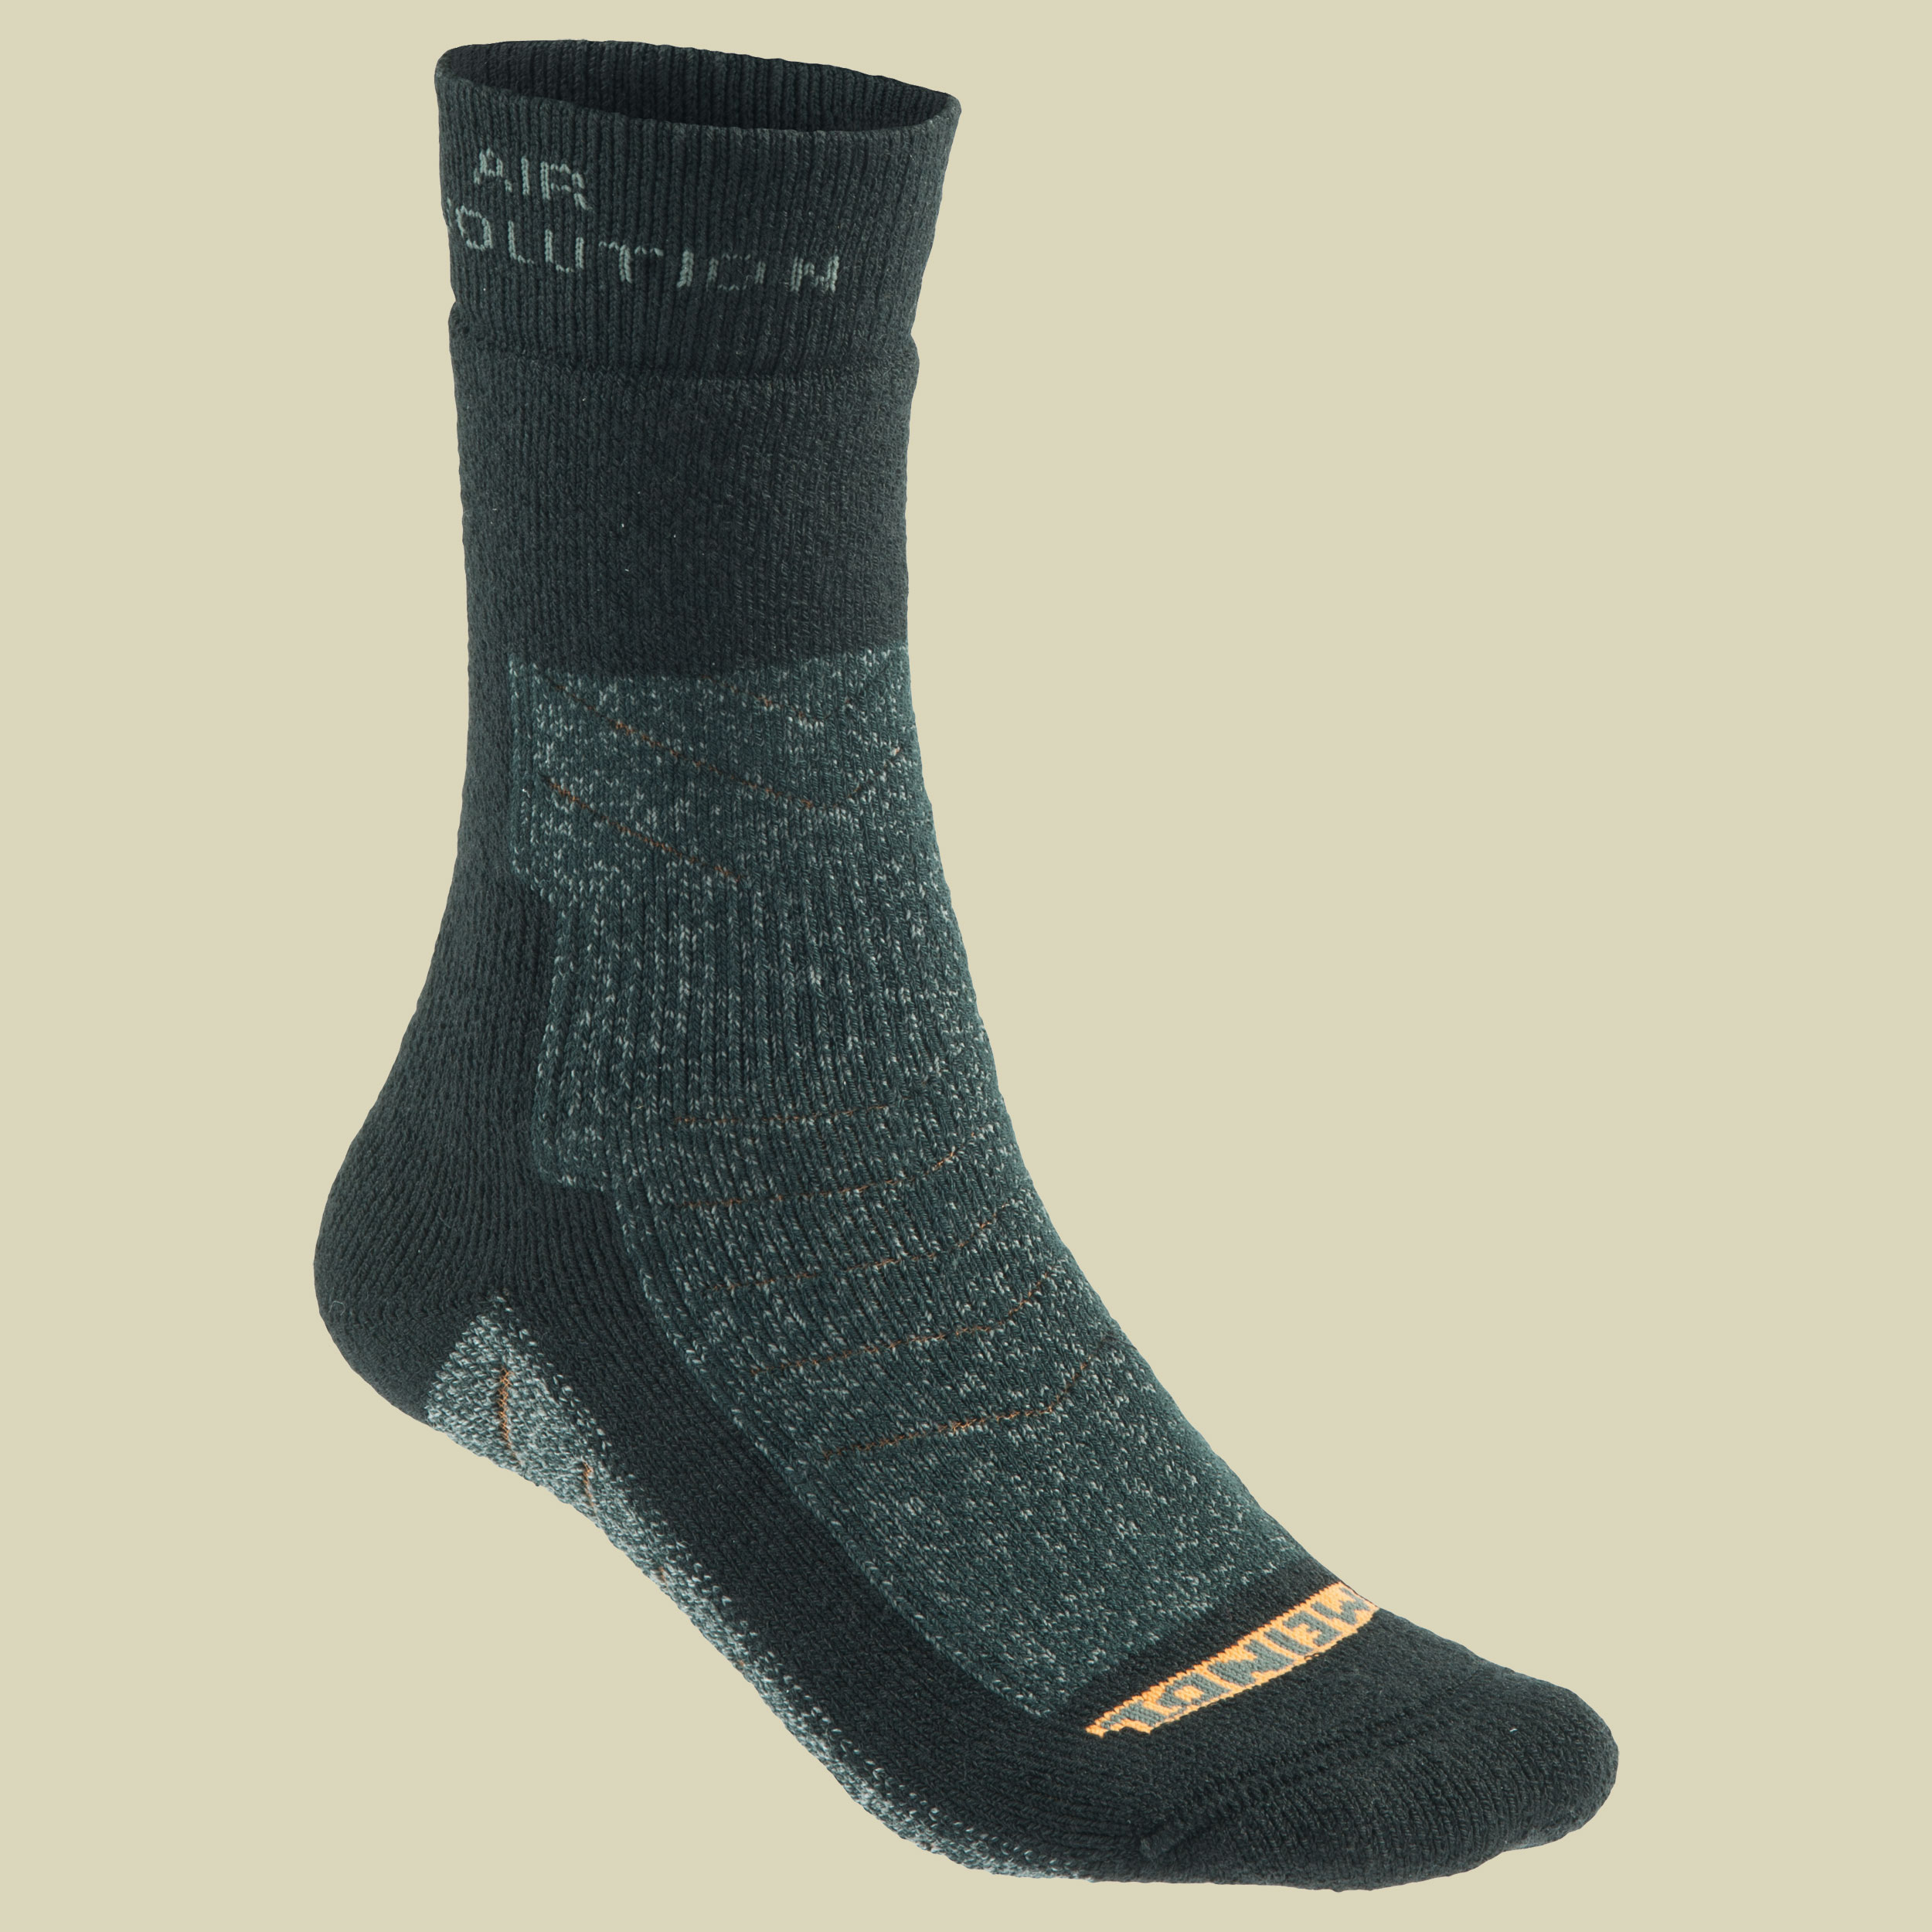 Revolution Sock Pro Größe 44-47 Farbe grau-orange